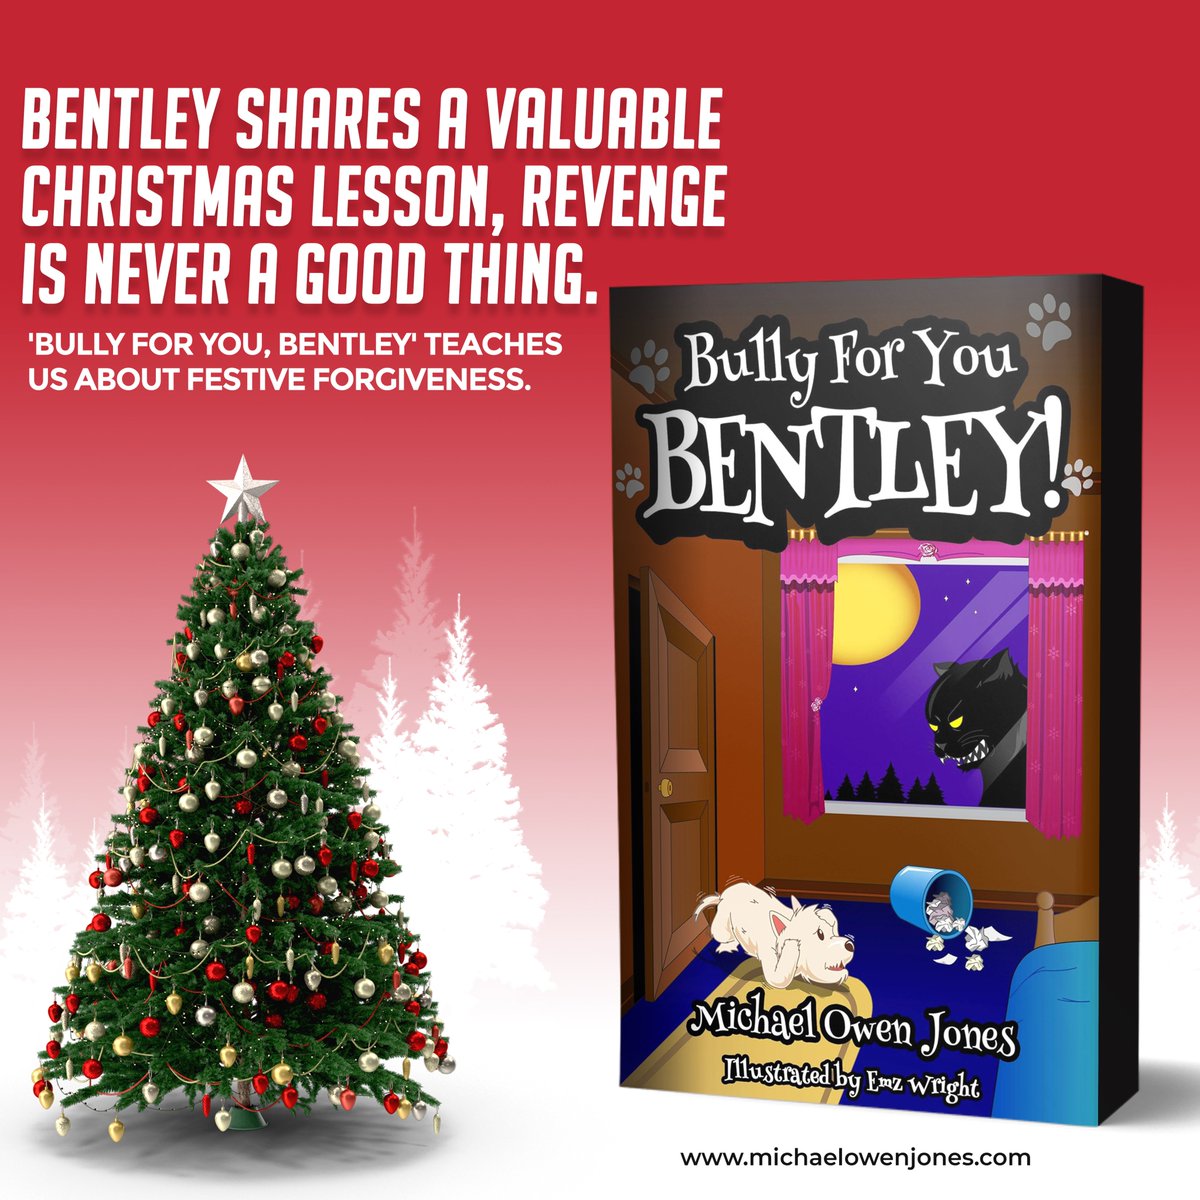 Let Bentley's wisdom inspire kindness and compassion this holiday.

Website: michaelowenjones.com
Book: amazon.com/dp/B00L9K5WXU

#FestiveForgiveness #HeartwarmingReads #FestiveFamilyFun #ChristmasMagic #ParentingJoy #HolidayCheer #SantaSquad #FestiveParenting #HolidayHelpers